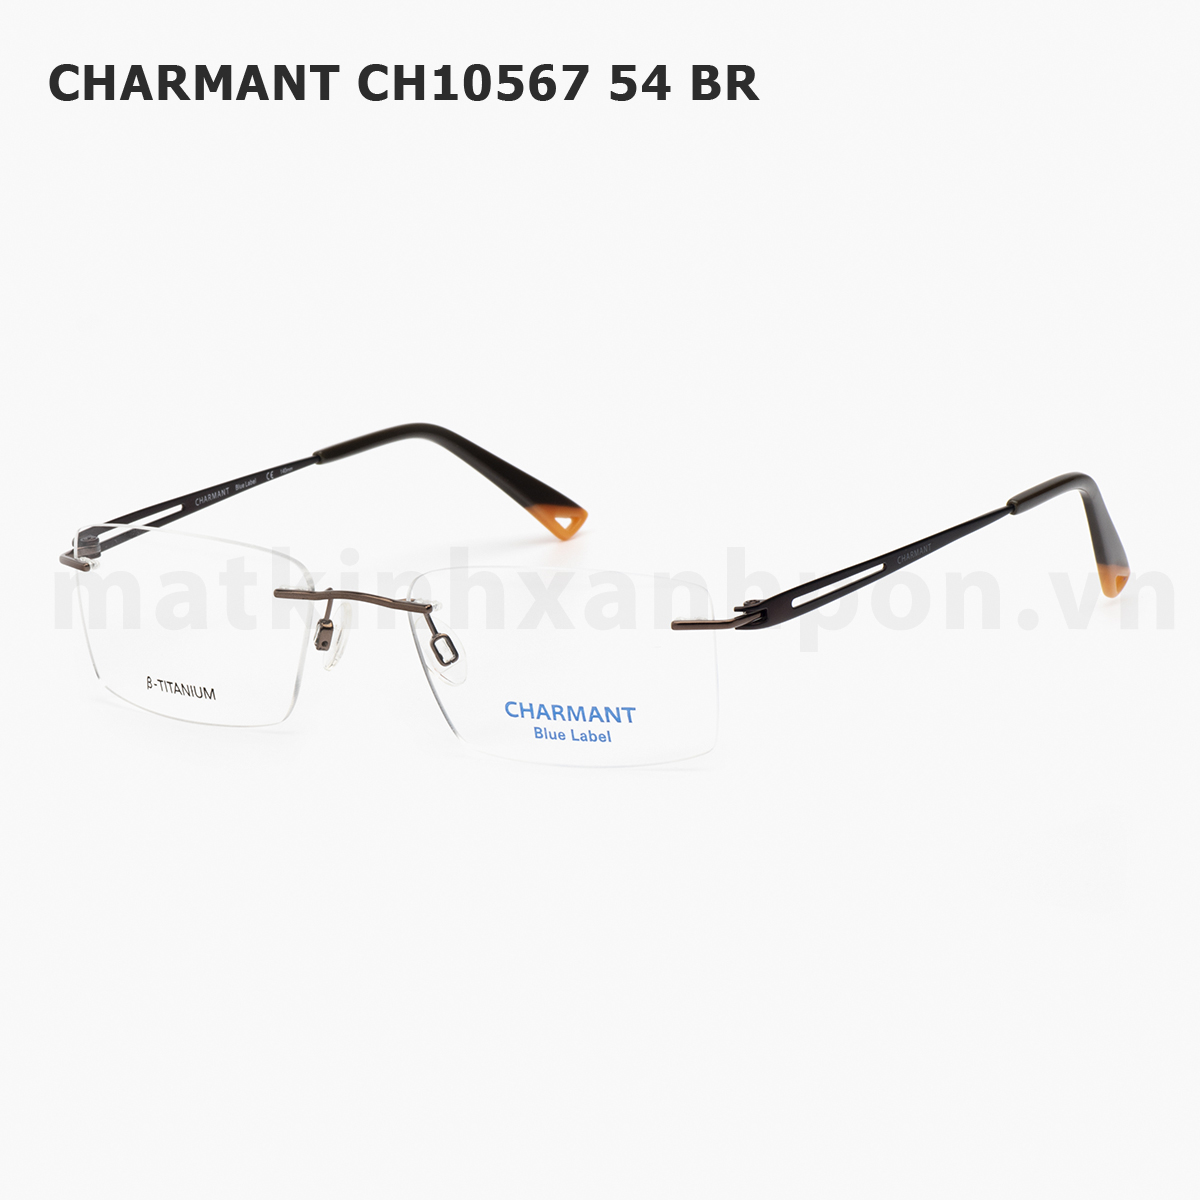 Charmant CH10567 54 BR